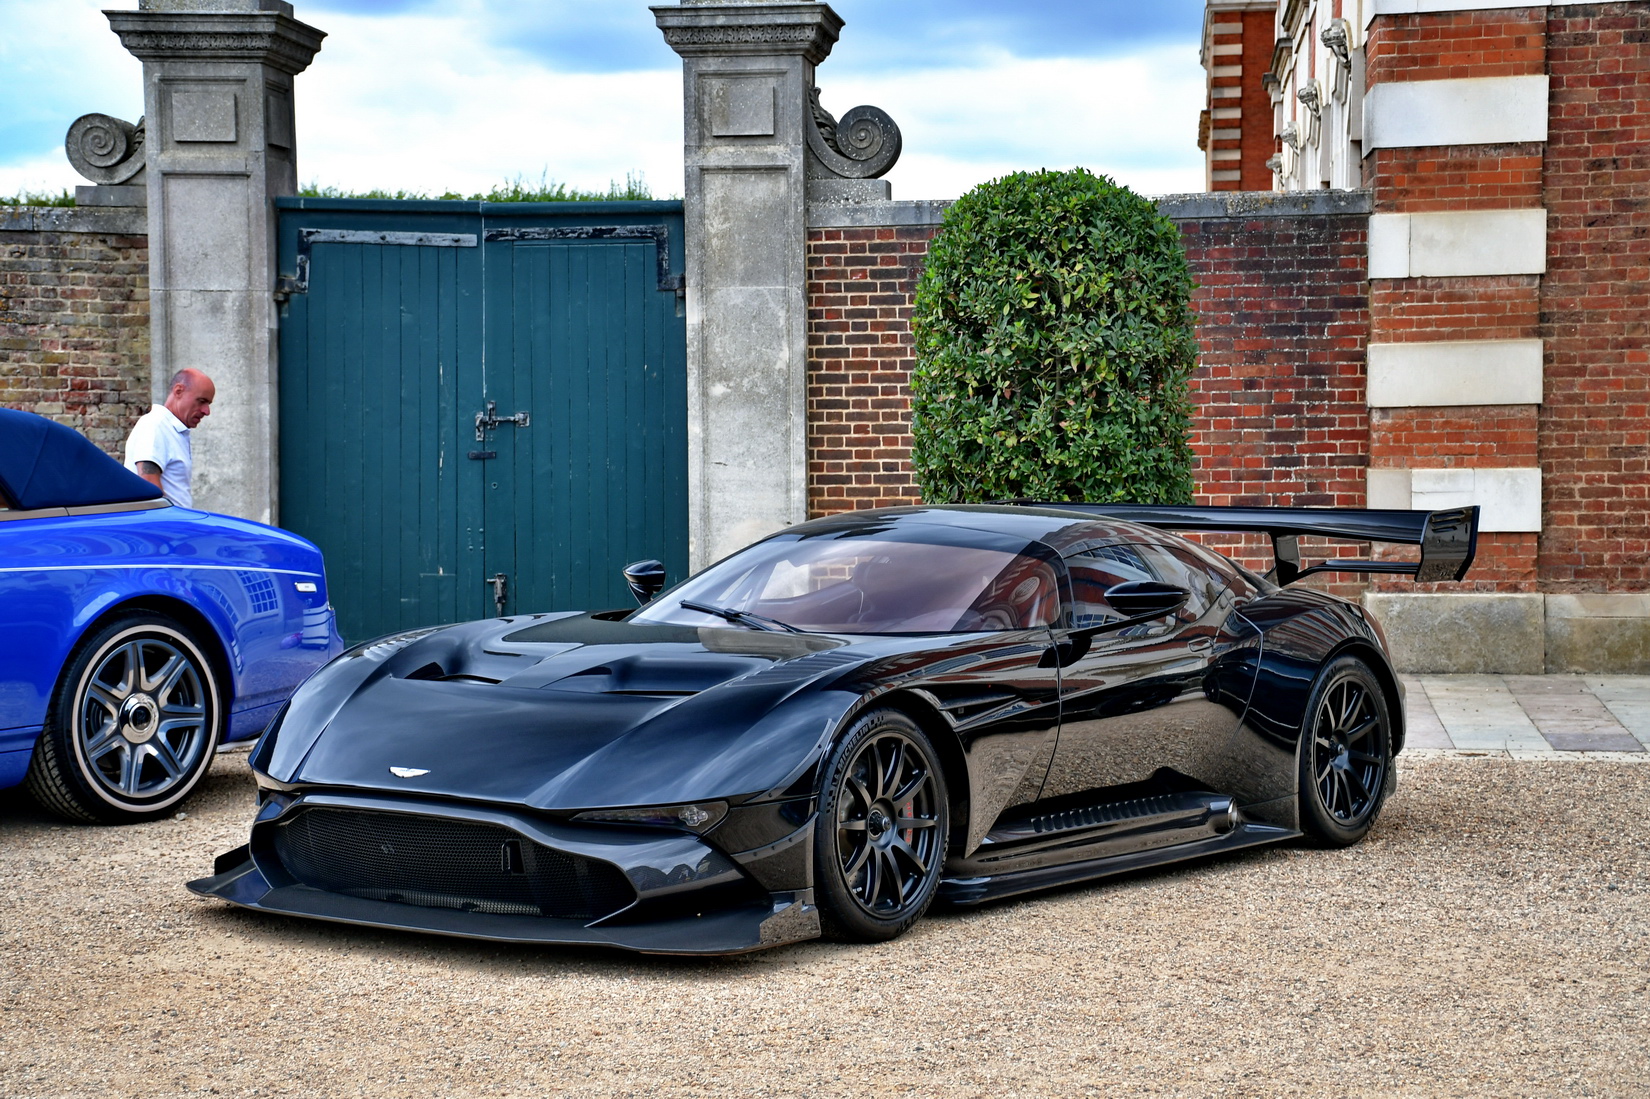 A black Aston Martin Vulcan